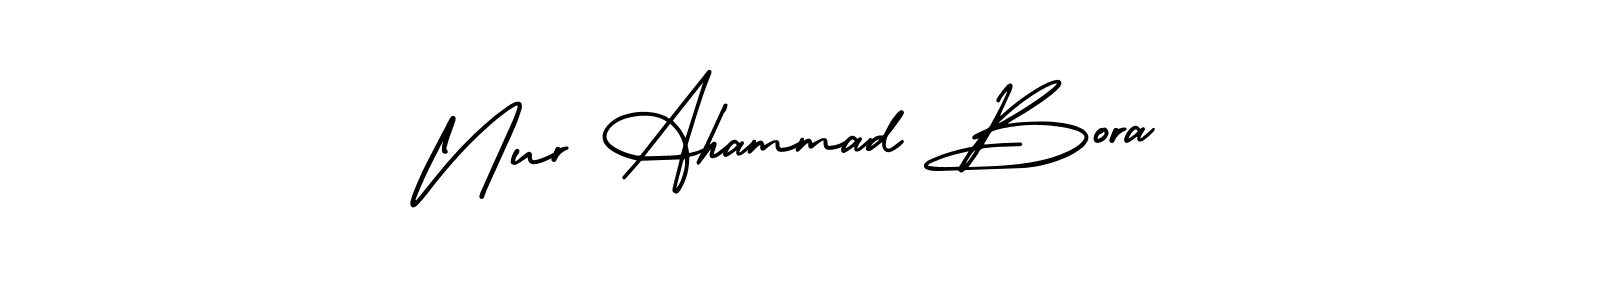 How to Draw Nur Ahammad Bora signature style? AmerikaSignatureDemo-Regular is a latest design signature styles for name Nur Ahammad Bora. Nur Ahammad Bora signature style 3 images and pictures png